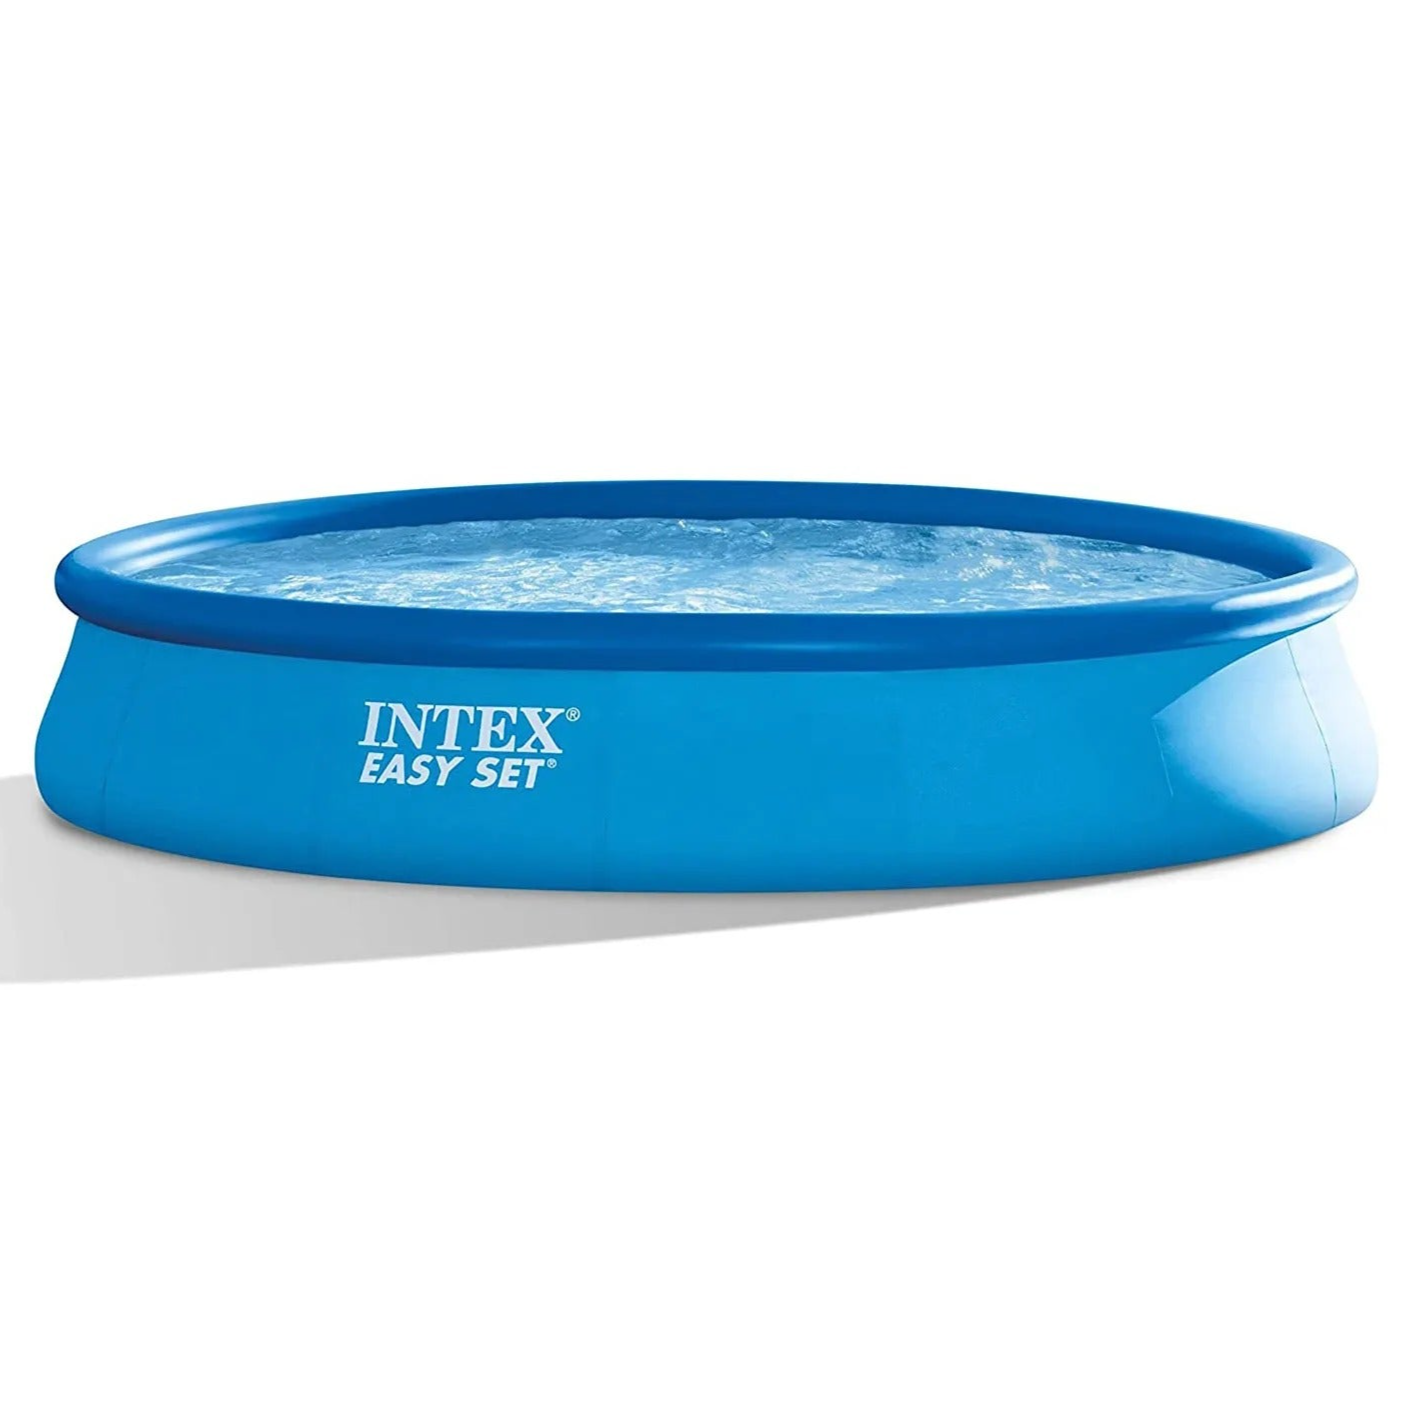 Intex - Easy Set Pool Set Blue - 13 Feet By 33 Inches